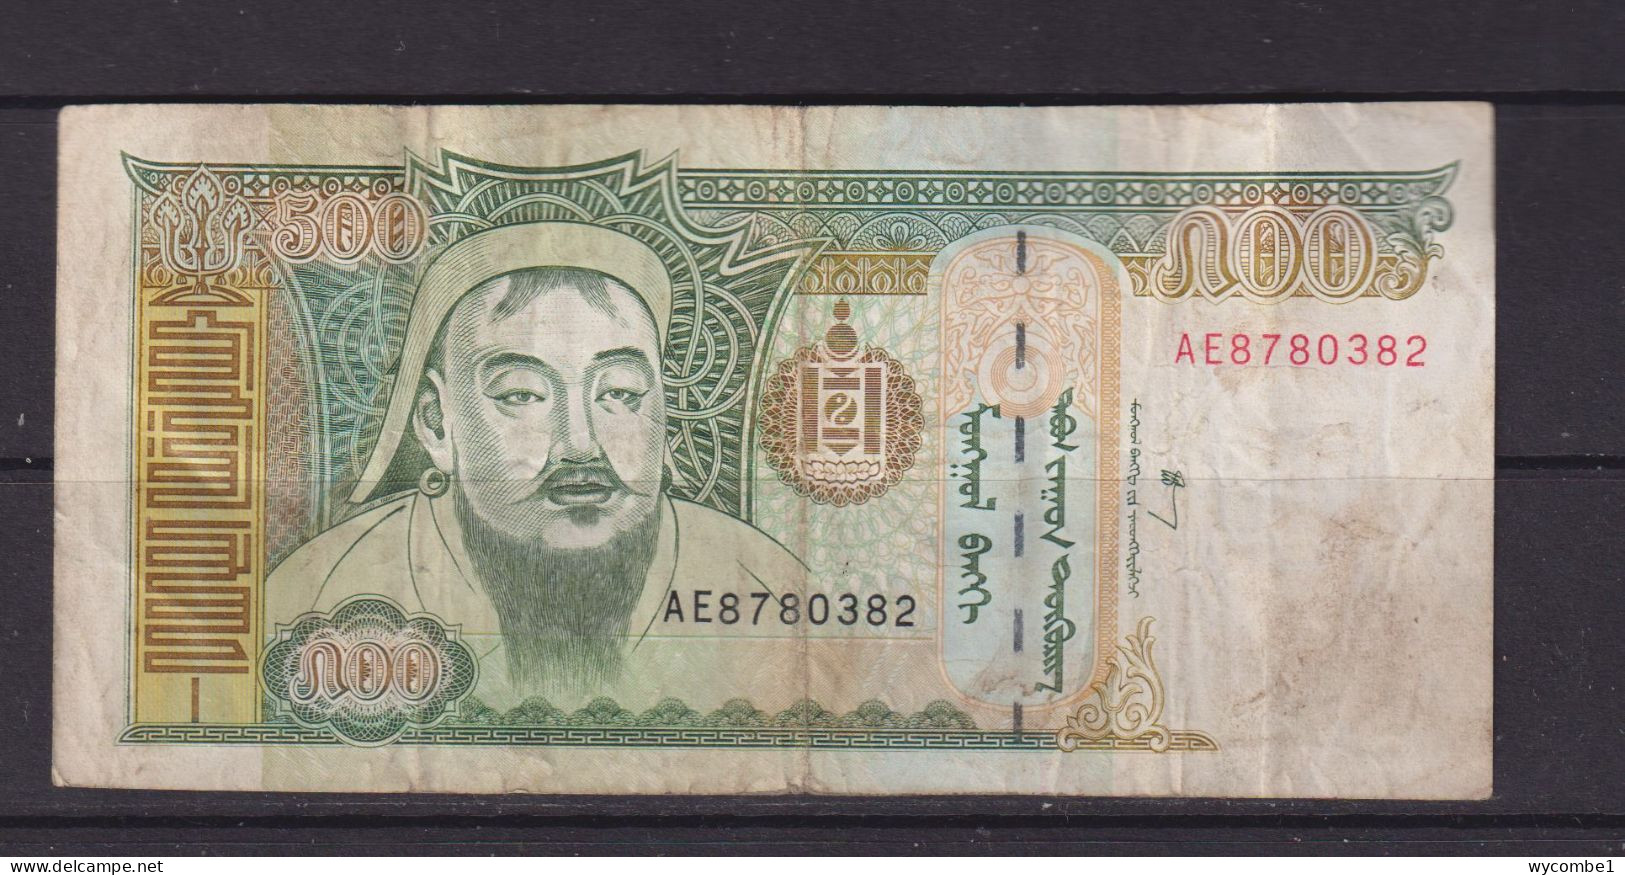 MONGOLIA - 2000 1000 Tugrik Circulated Banknote - Mongolia